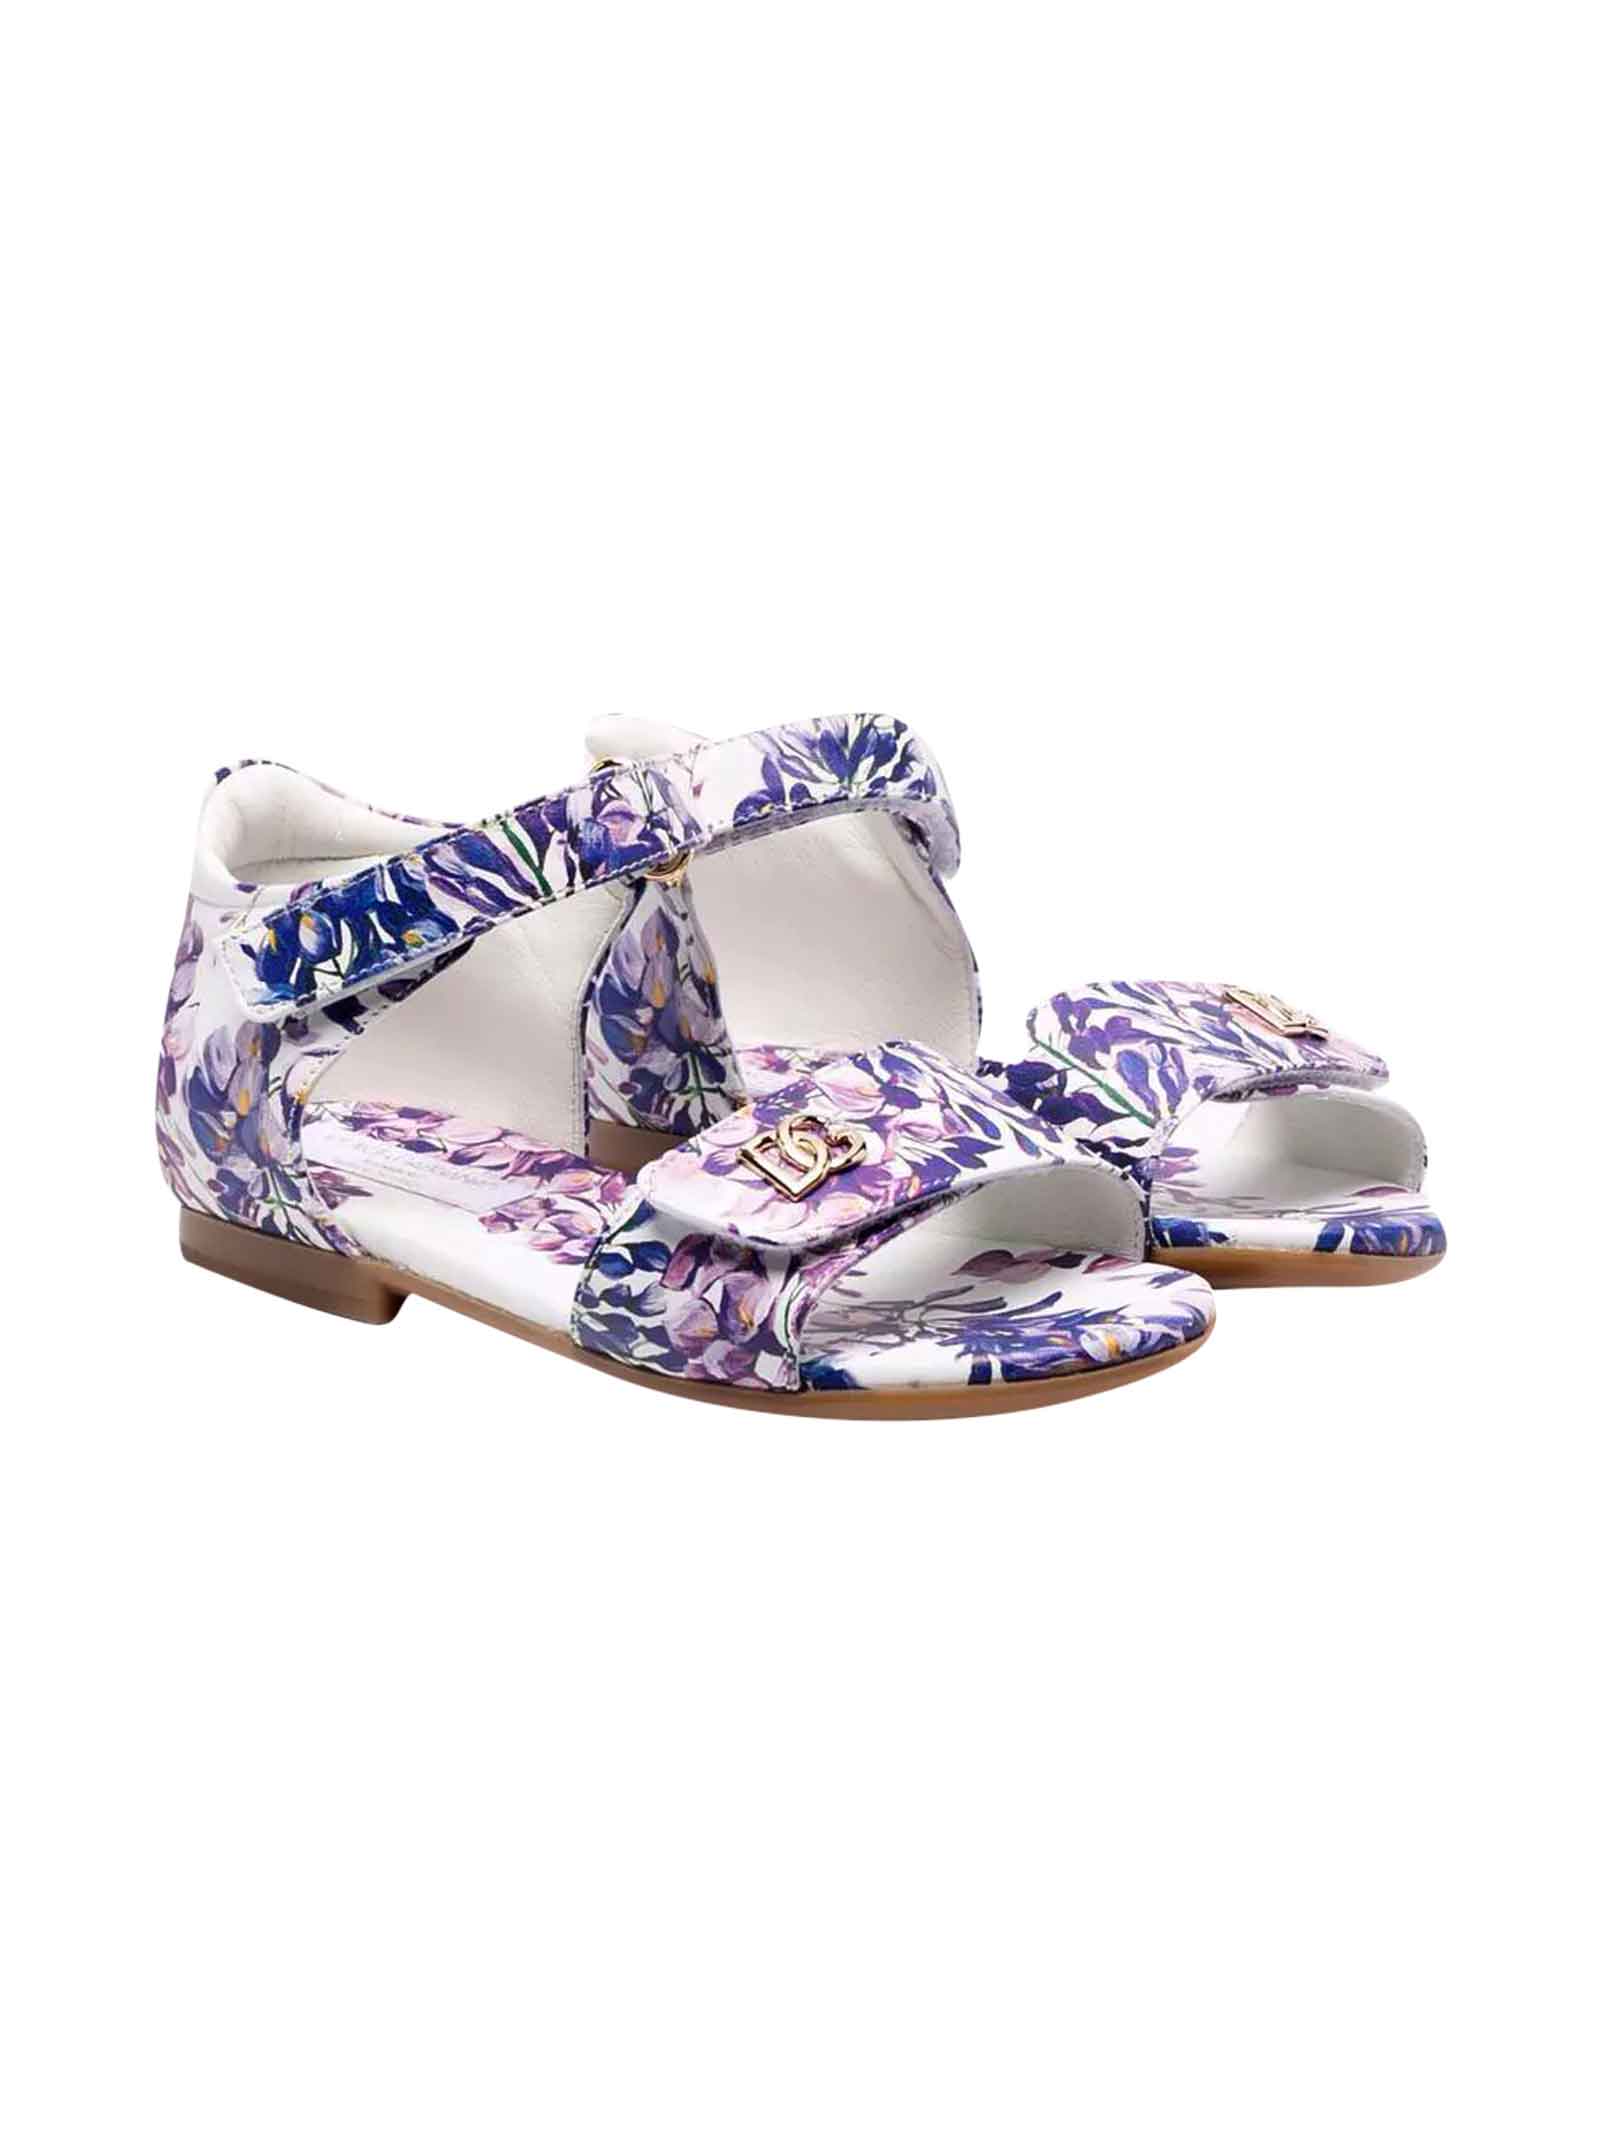 Dolce & Gabbana Floral Sandals